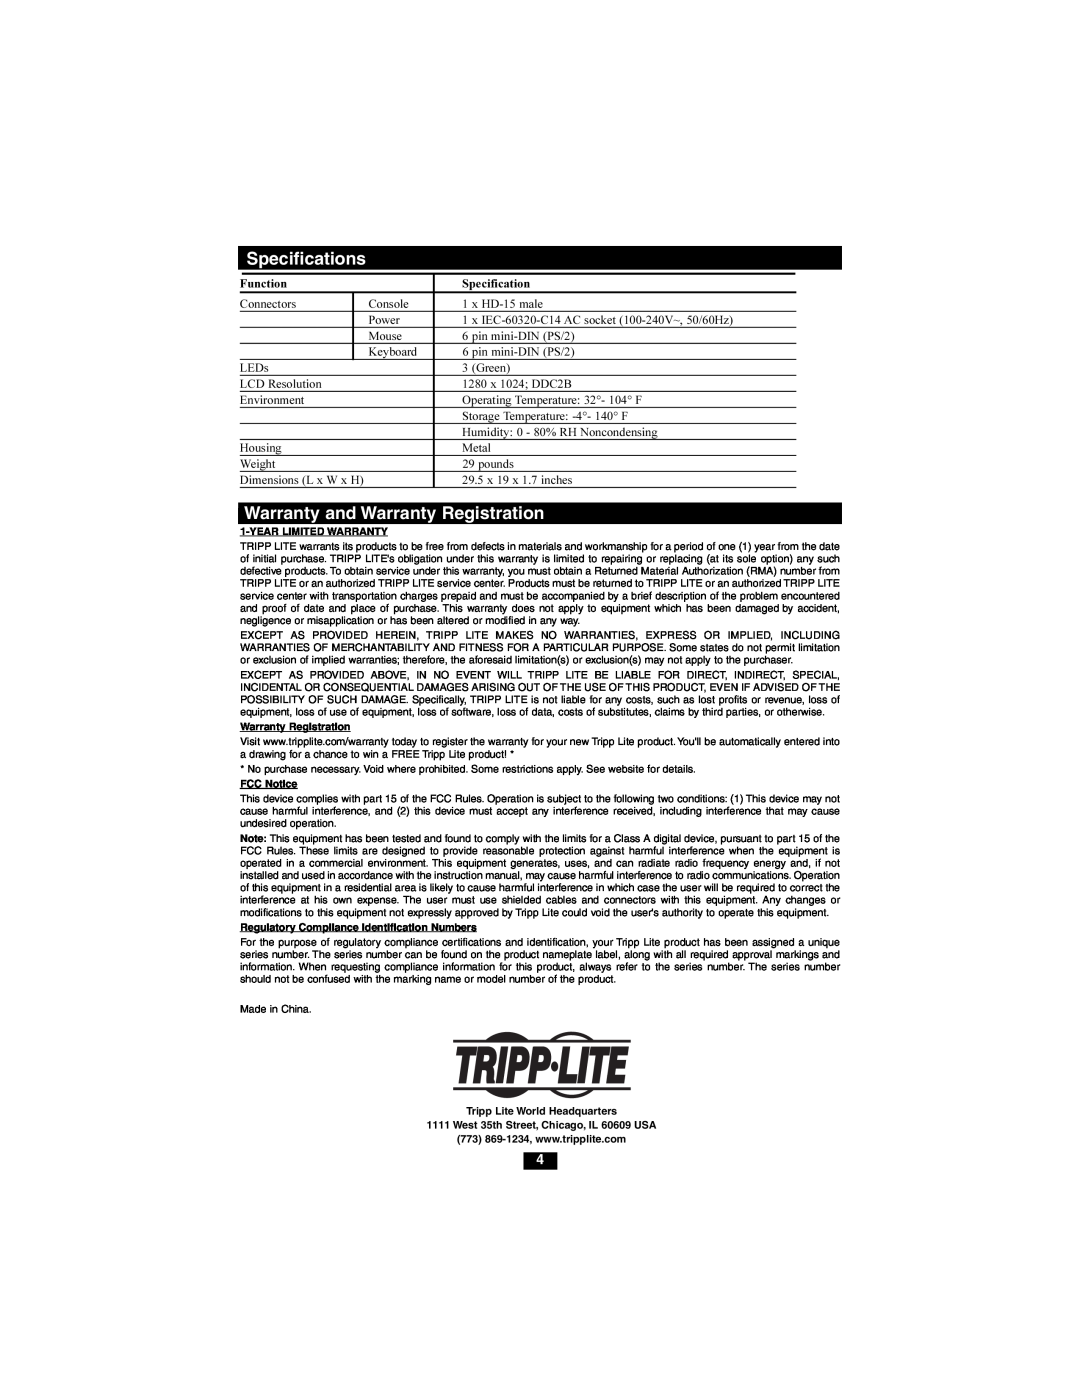 Tripp Lite B021-000-17 owner manual Specifications, Warranty and Warranty Registration, Year Limited Warranty, FCC Notice 